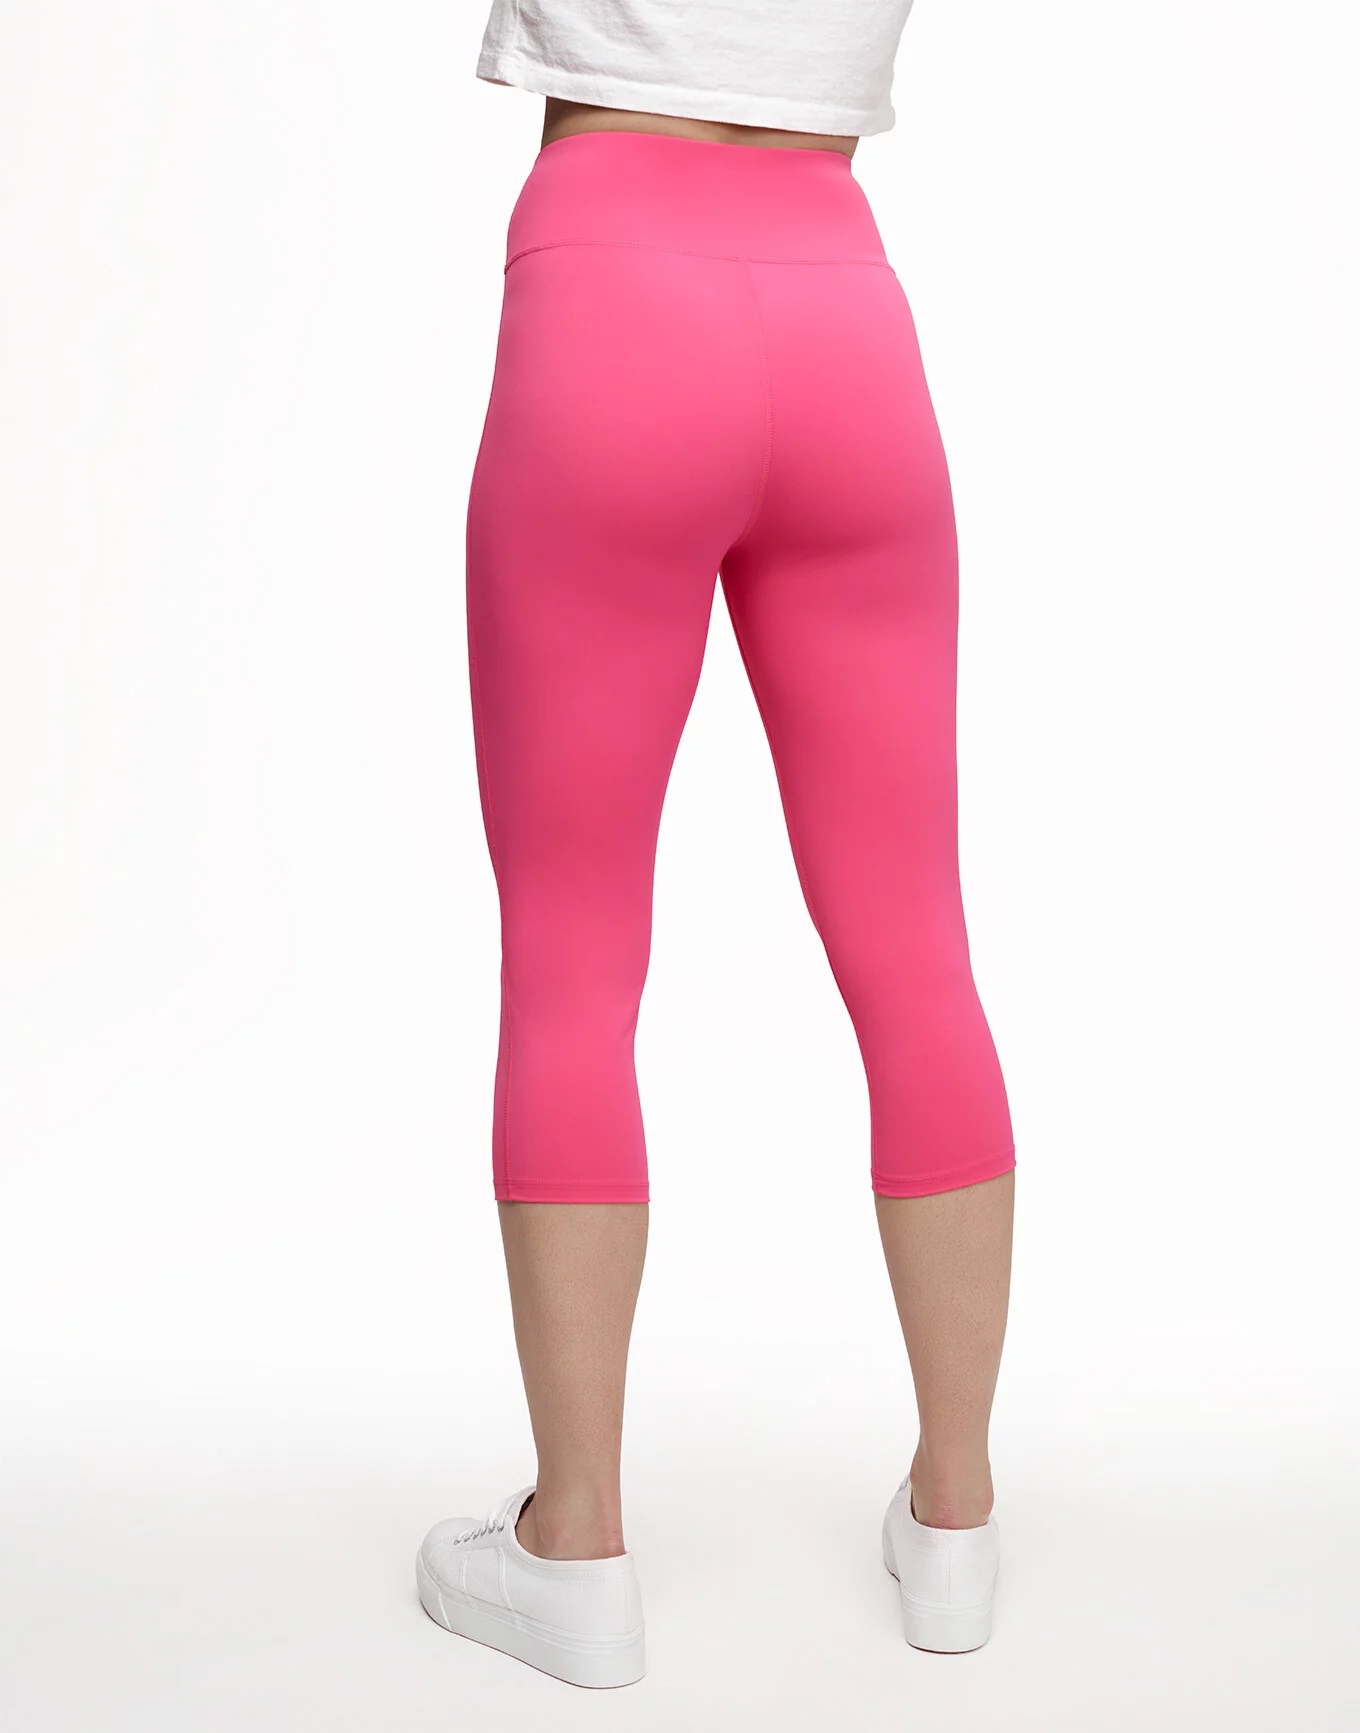 Buy KPC Dark Pink Women's Slim Fit Cotton Ankle Length Leggings